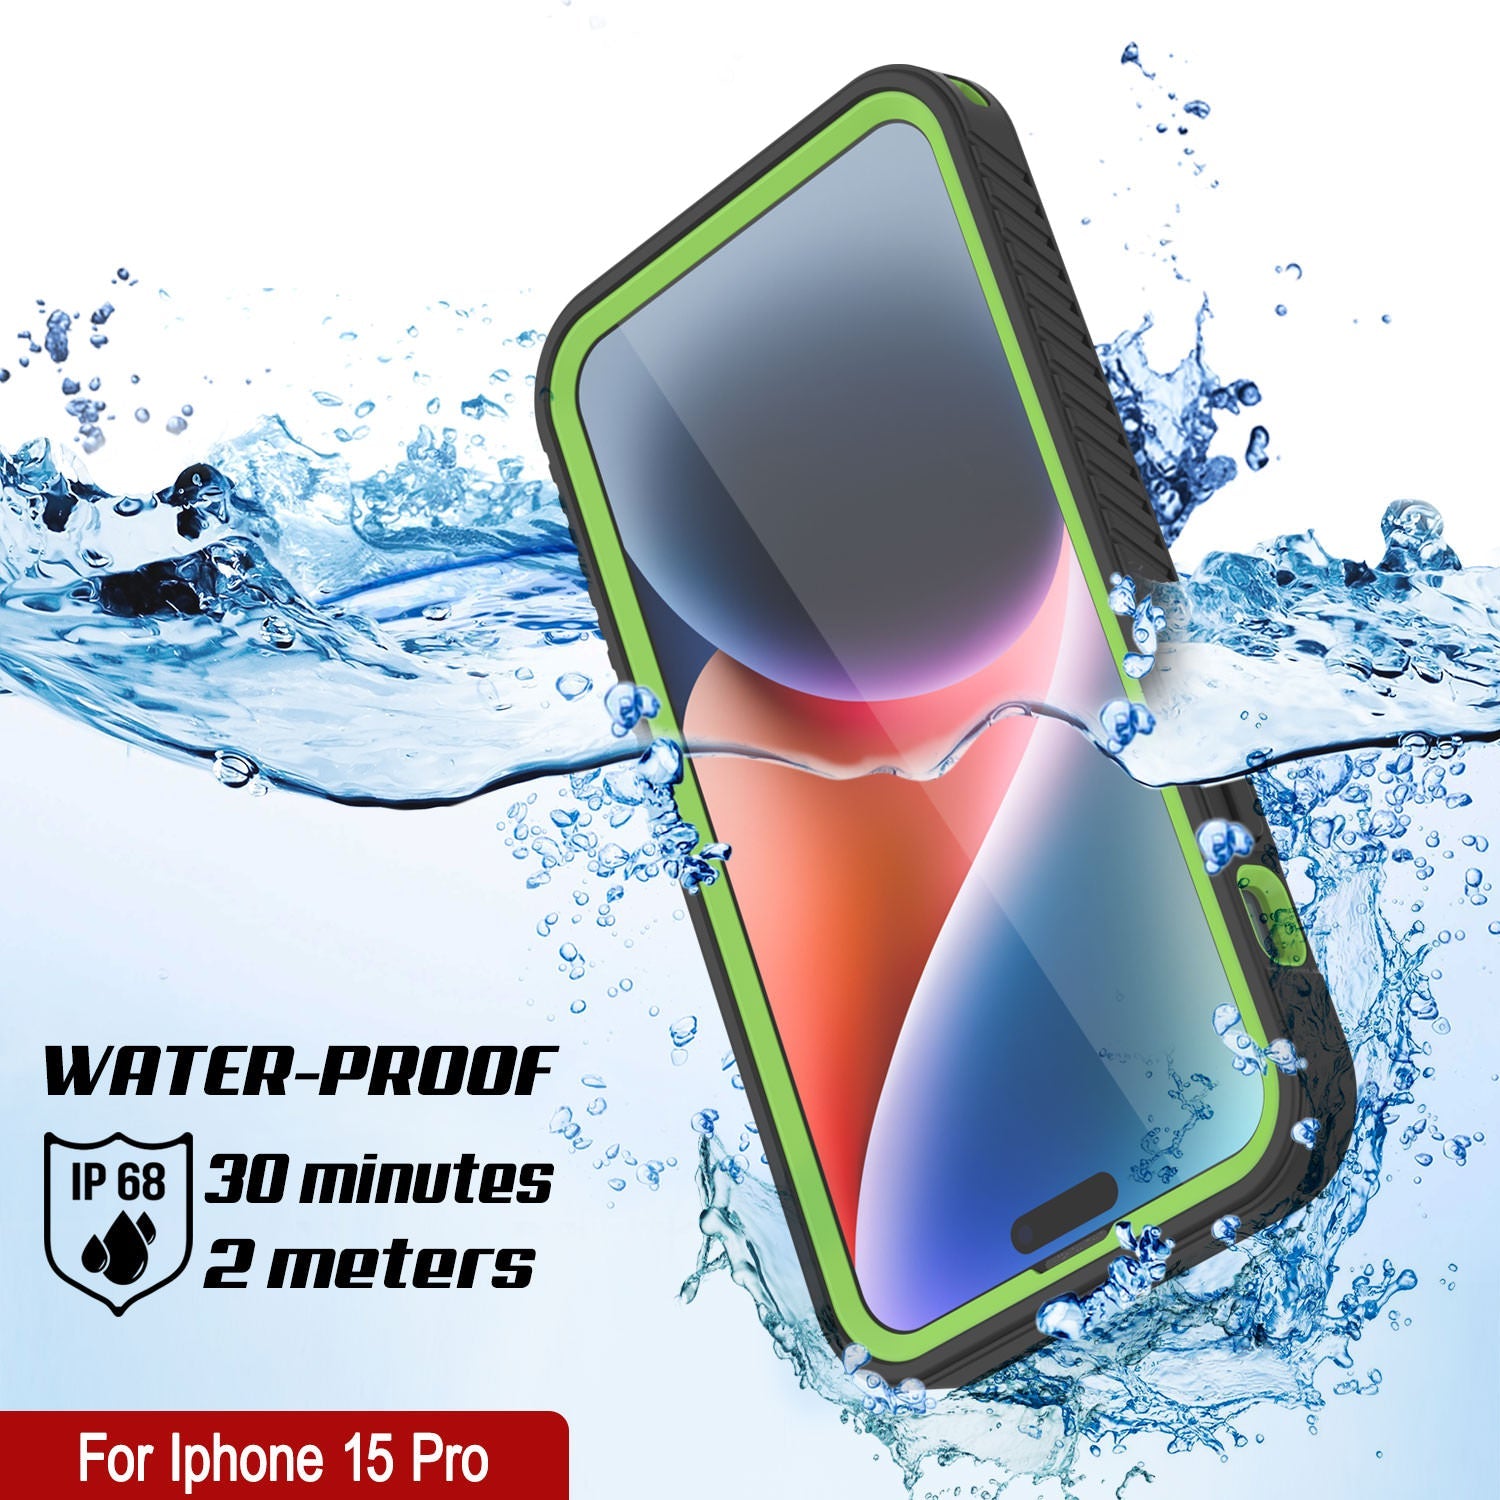 iPhone 15 Pro Waterproof IP68 Case, Punkcase [Light green] [StudStar Series] [Slim Fit] [Dirtproof]